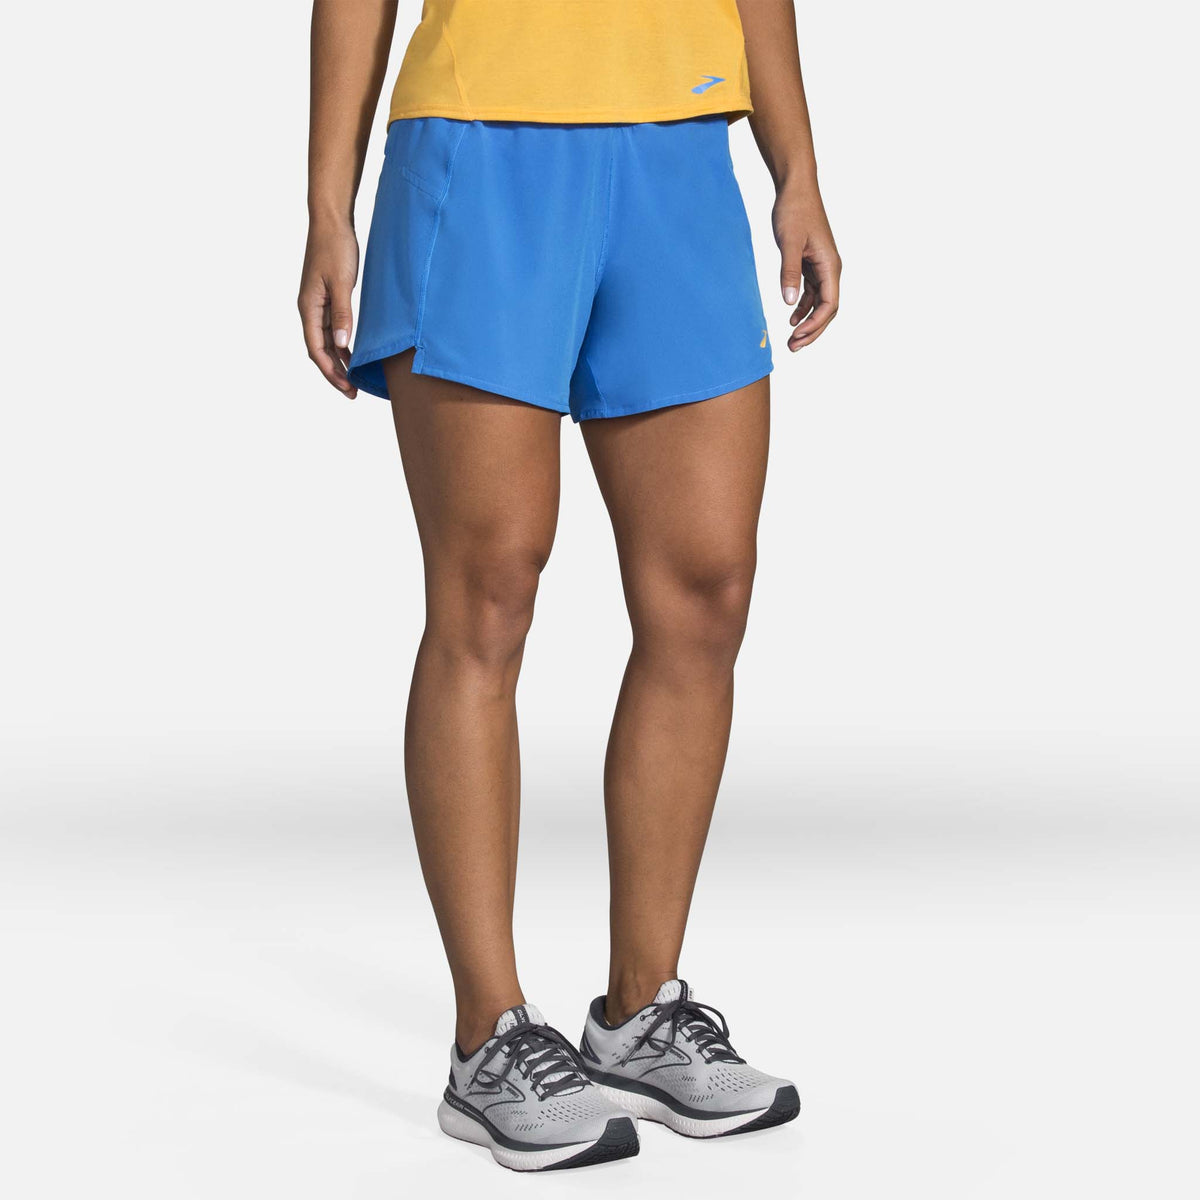 Brooks Chaser 5-inch running shorts for women